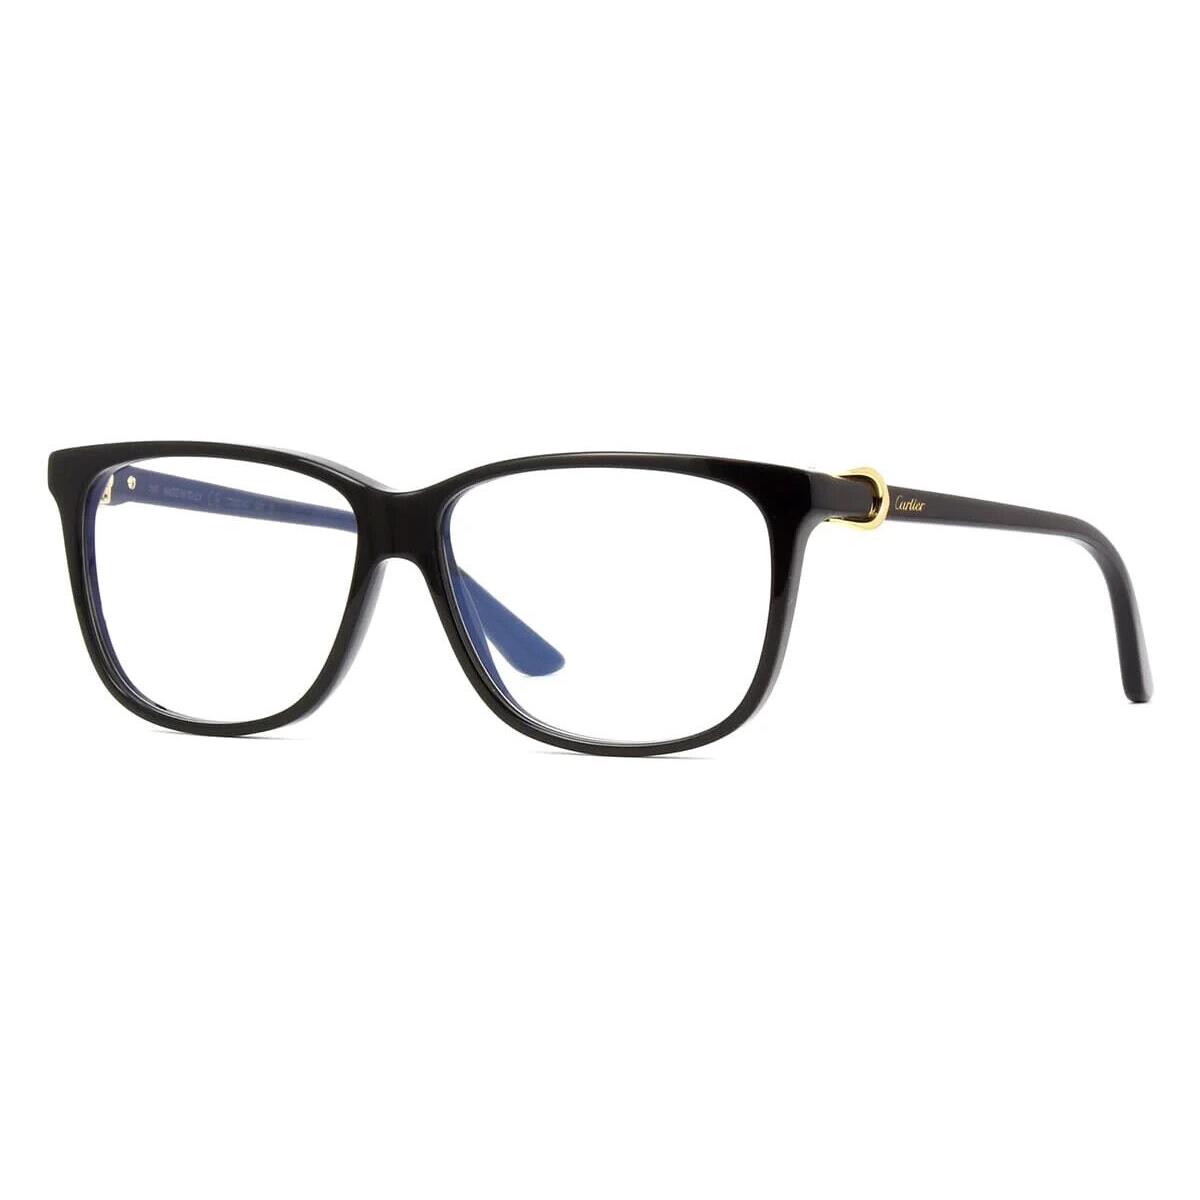 Cartier Rectangular Eyeglasses CT0351o-001 Shiny Black Frame Classic Full Rim